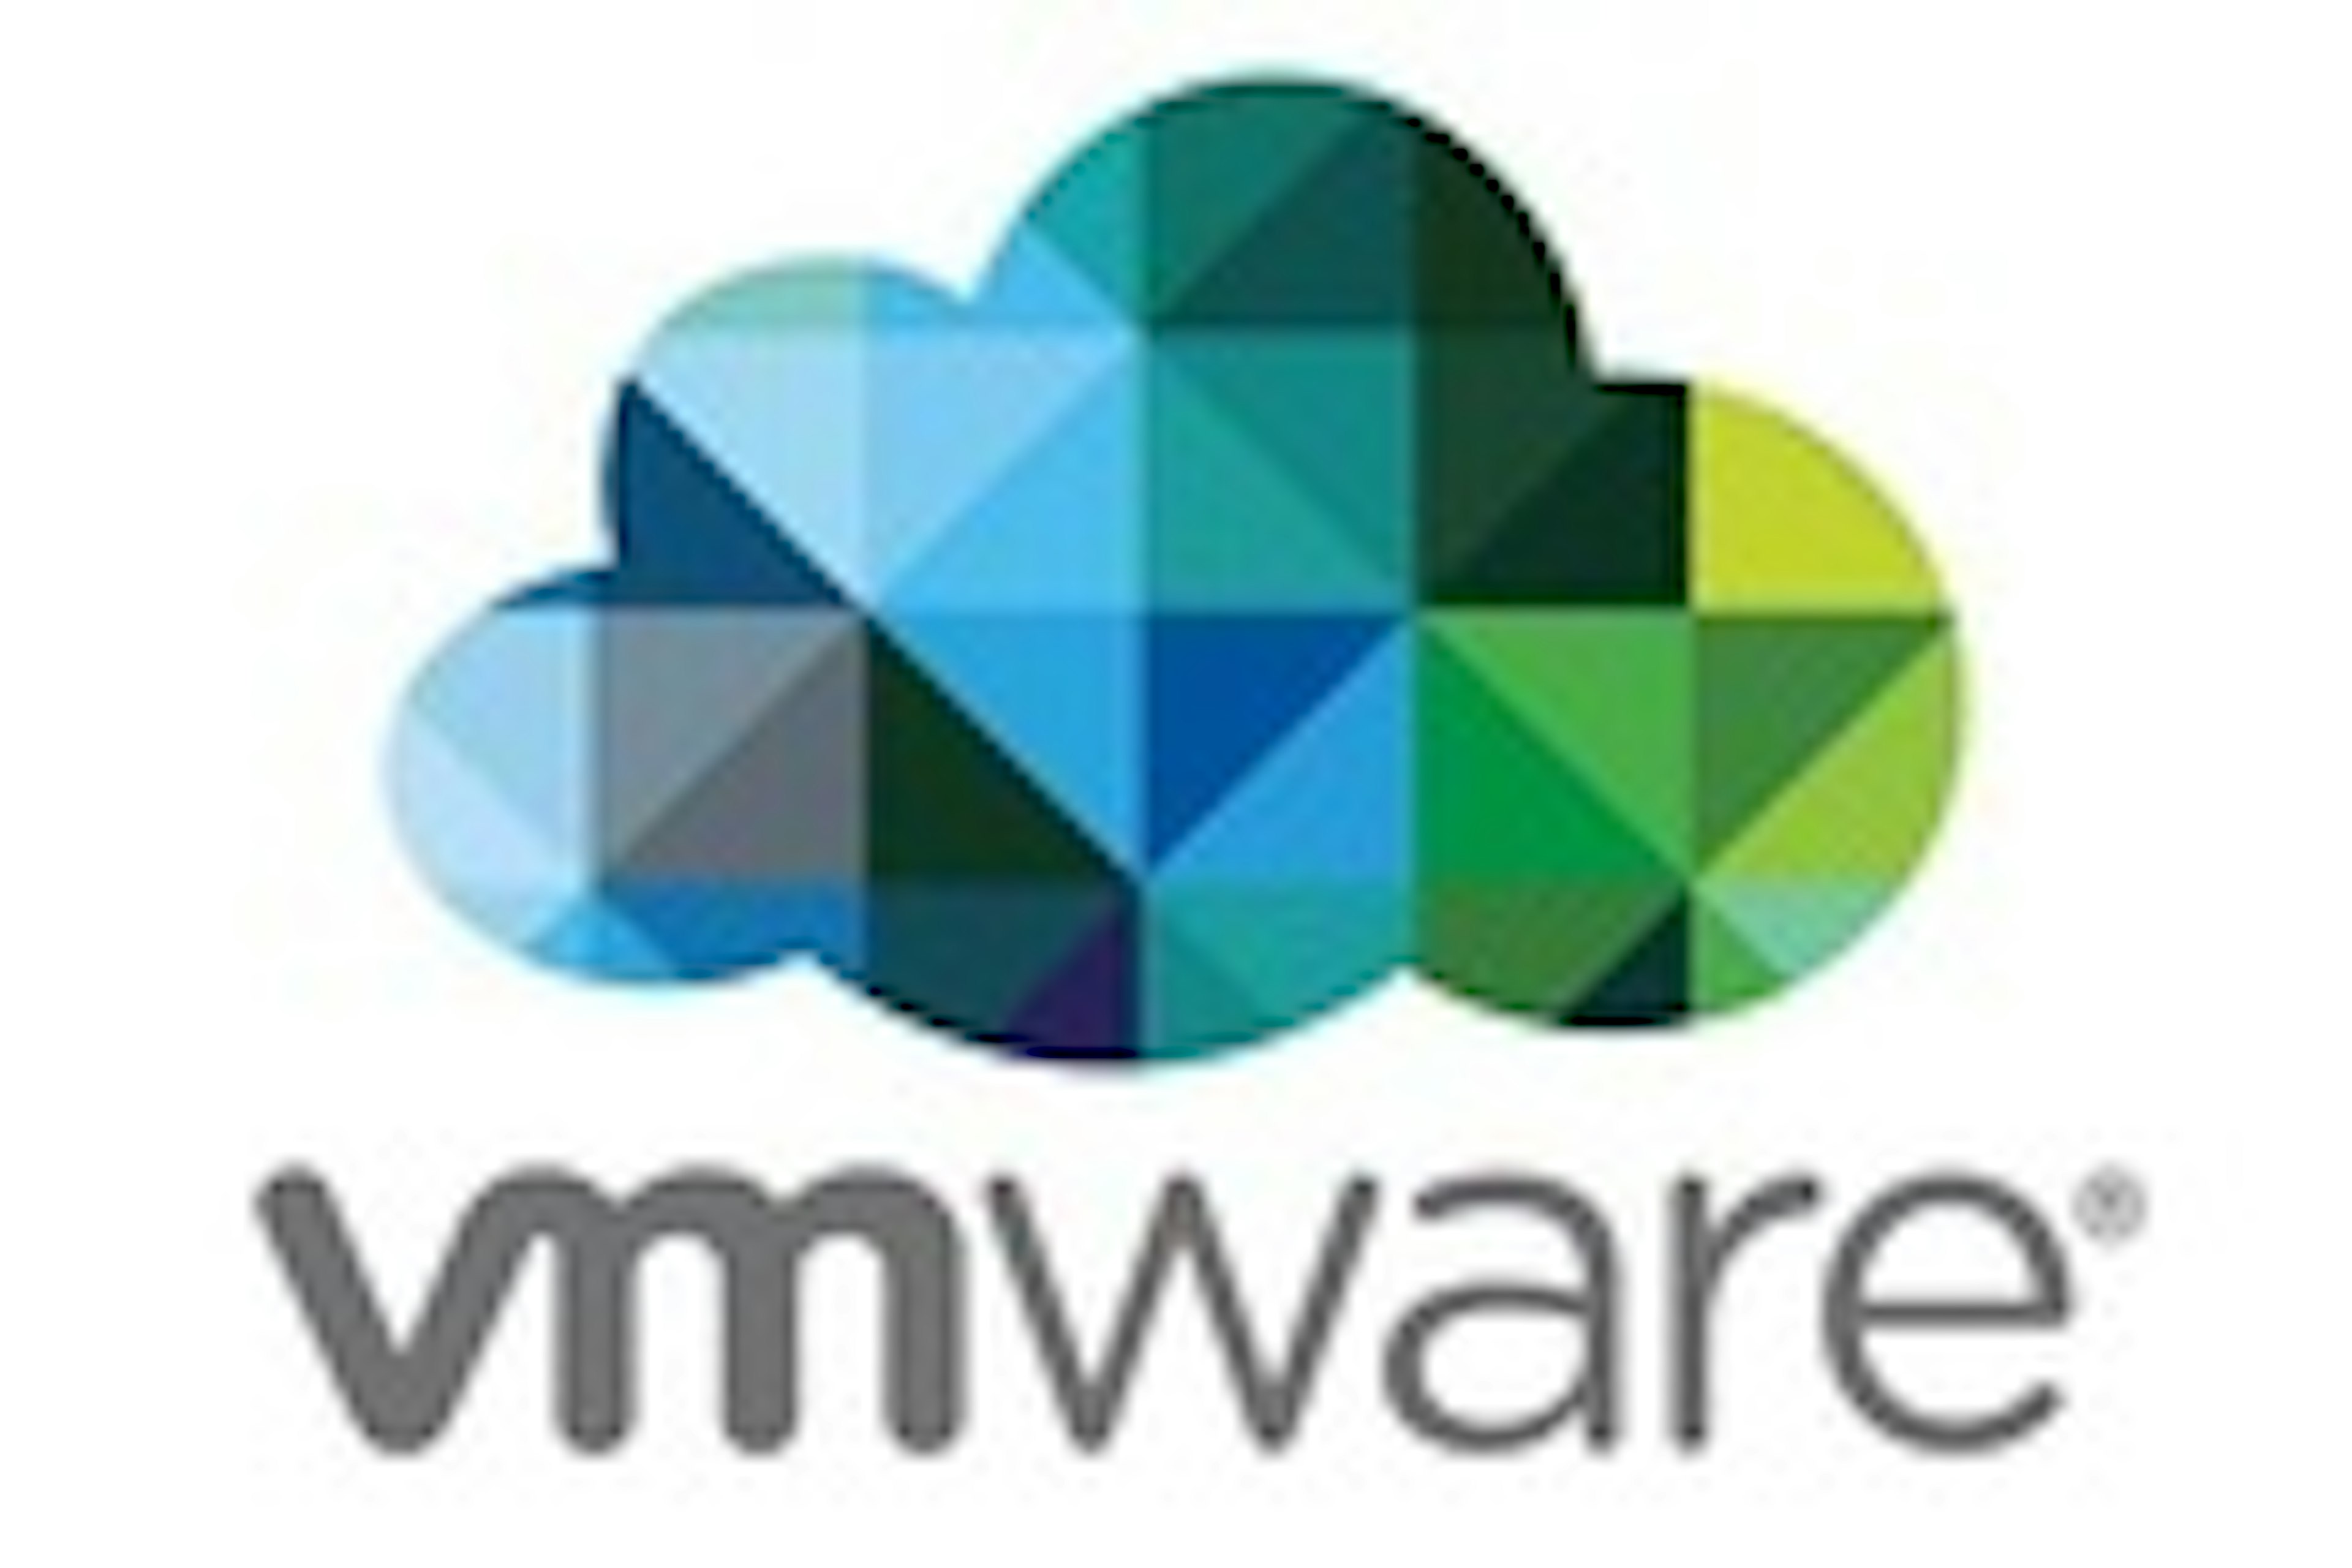 VMware Cloud Foundation Logo